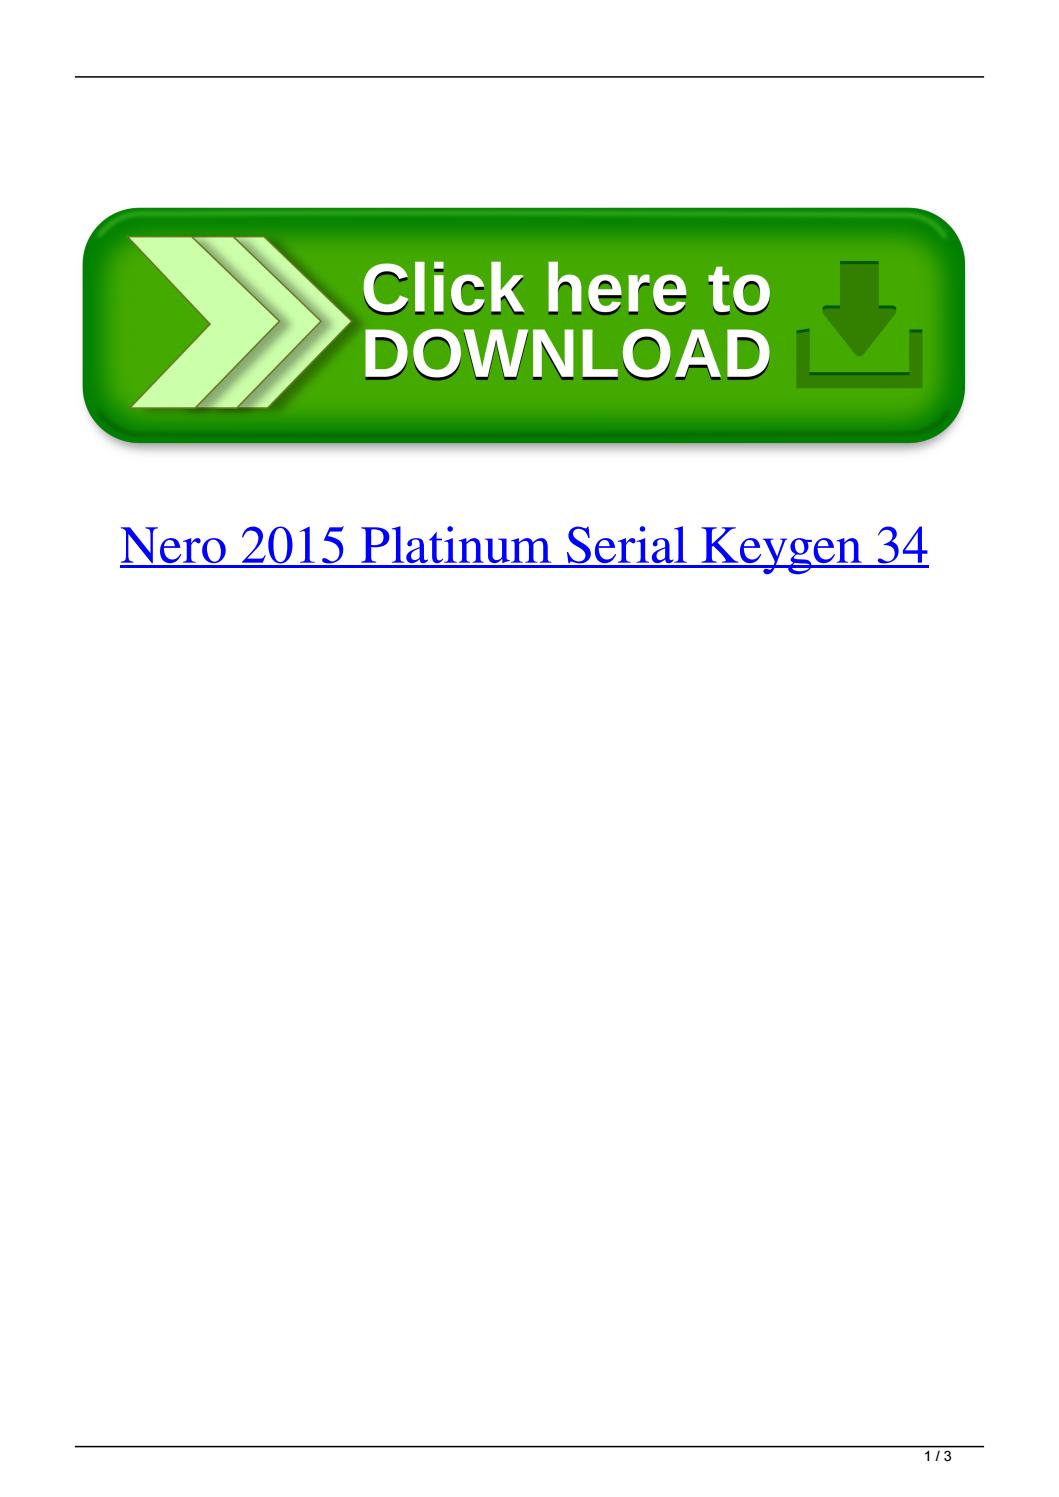 nero 2015 platinum serial keygen 34